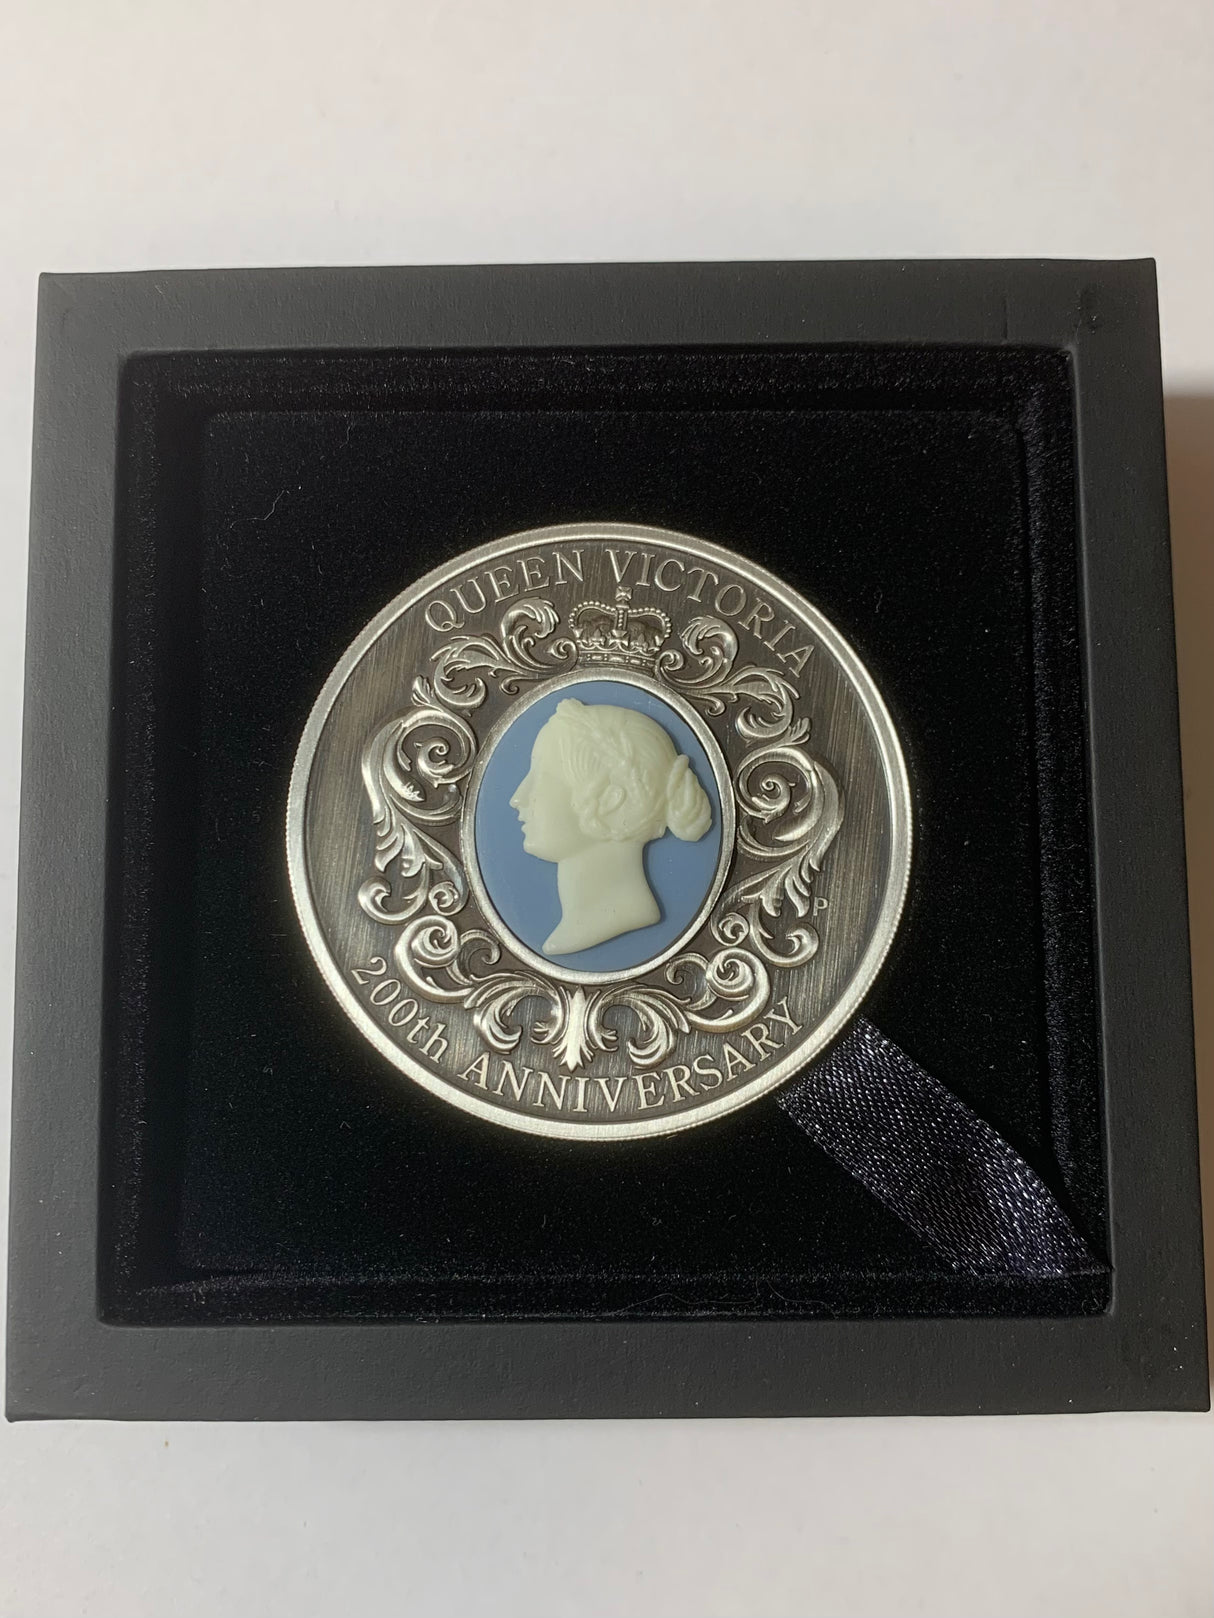 2019 $2 2oz Silver Cameo Antiqued Coin. Queen Victoria 200th Anniversary.